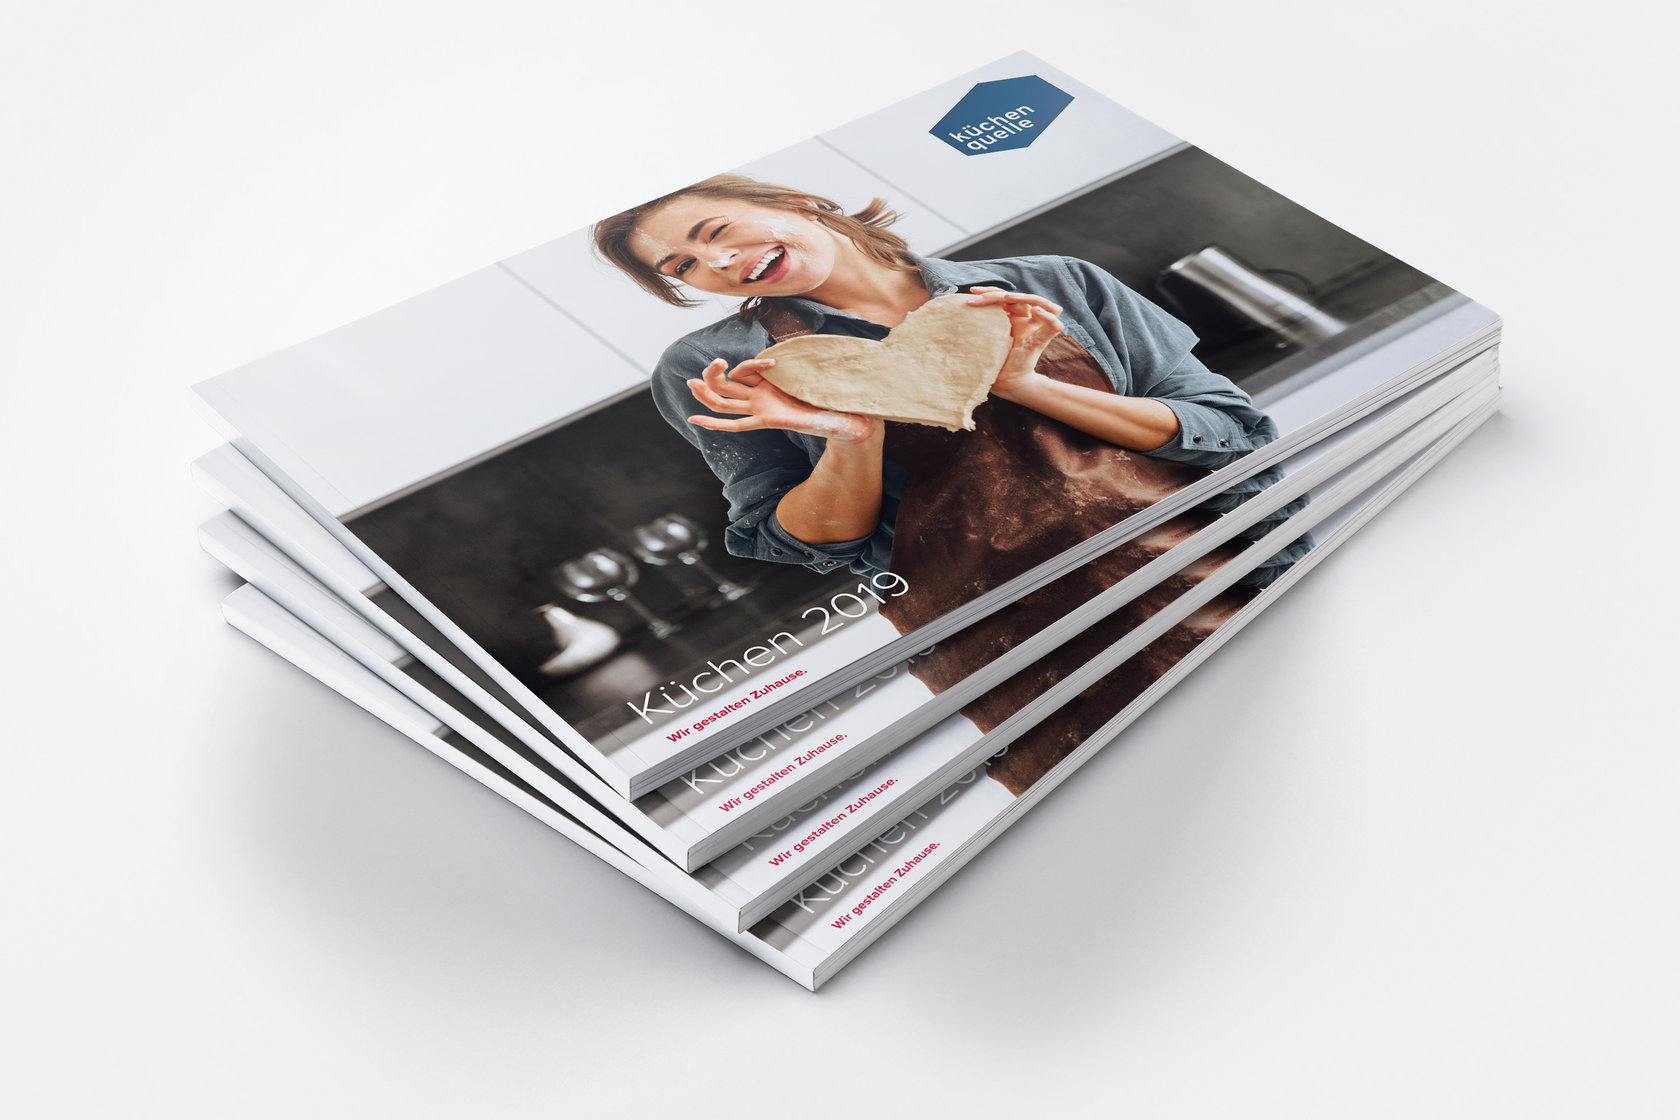 kuechenquelle Sortimentskatalog 2019: Cover, mehrere Kataloge auf einem Stapel